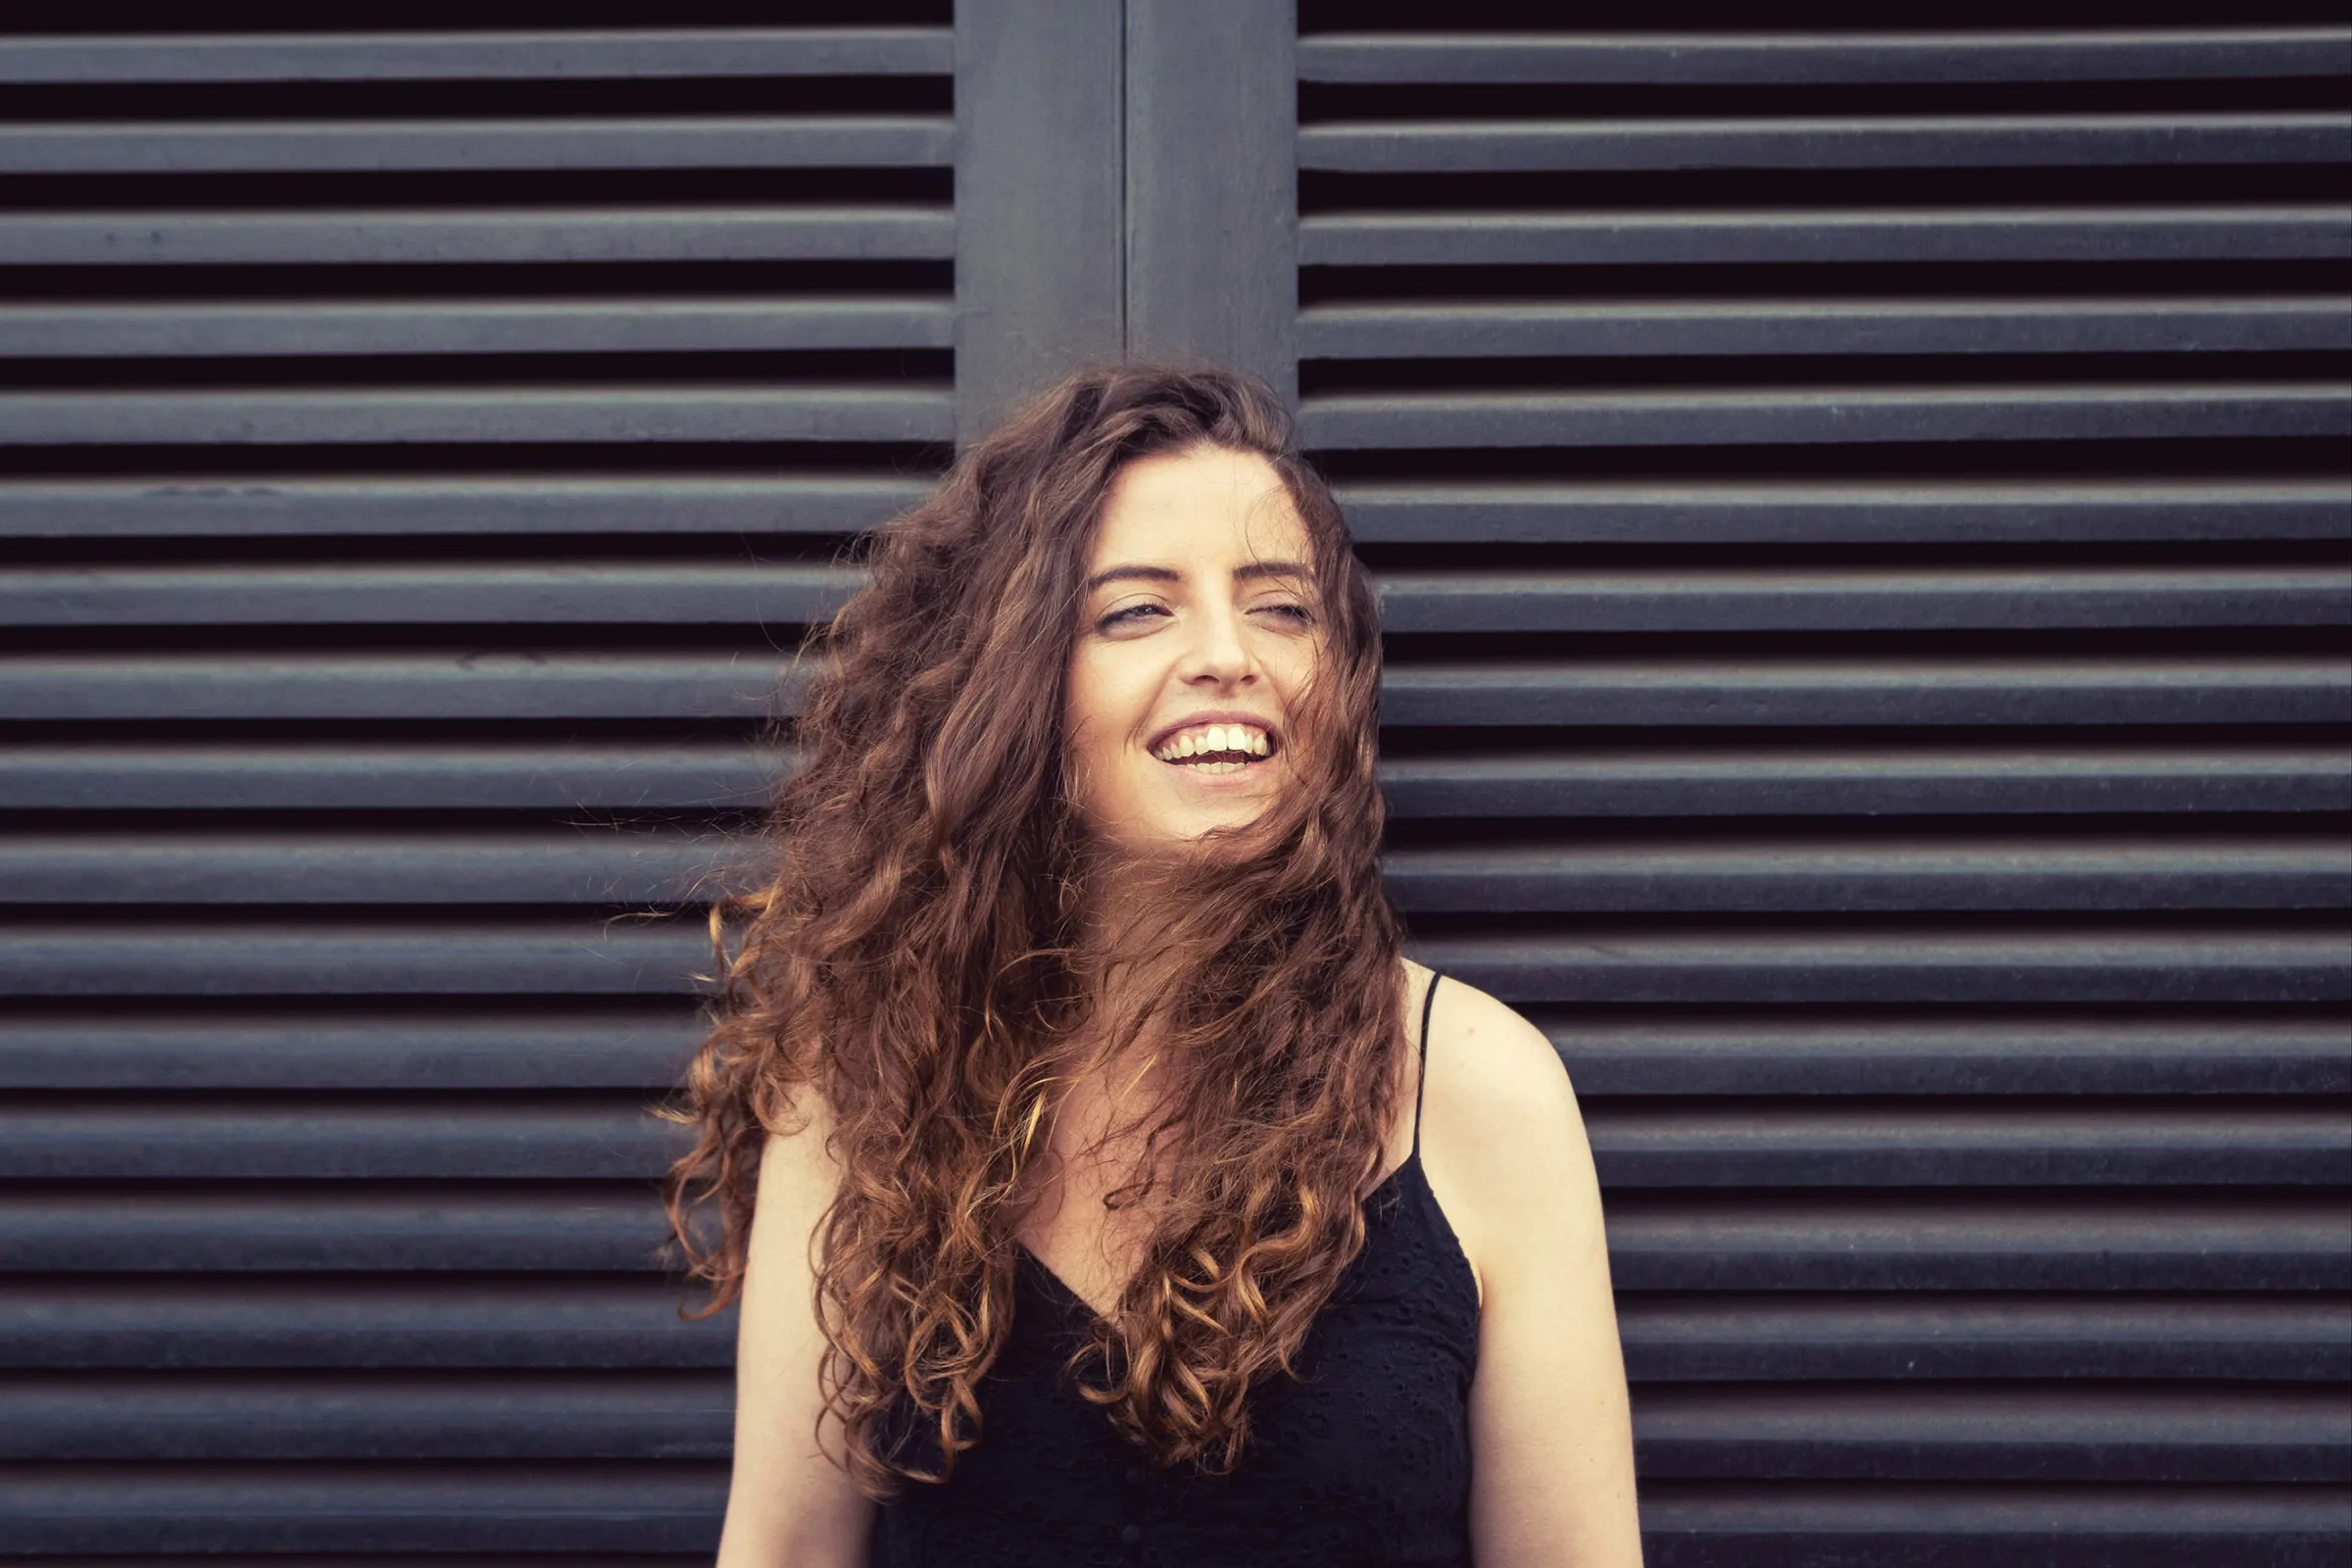 Irish Indie-Pop artist ROWLETTE shares new single ‘Letters’ – Listen Now